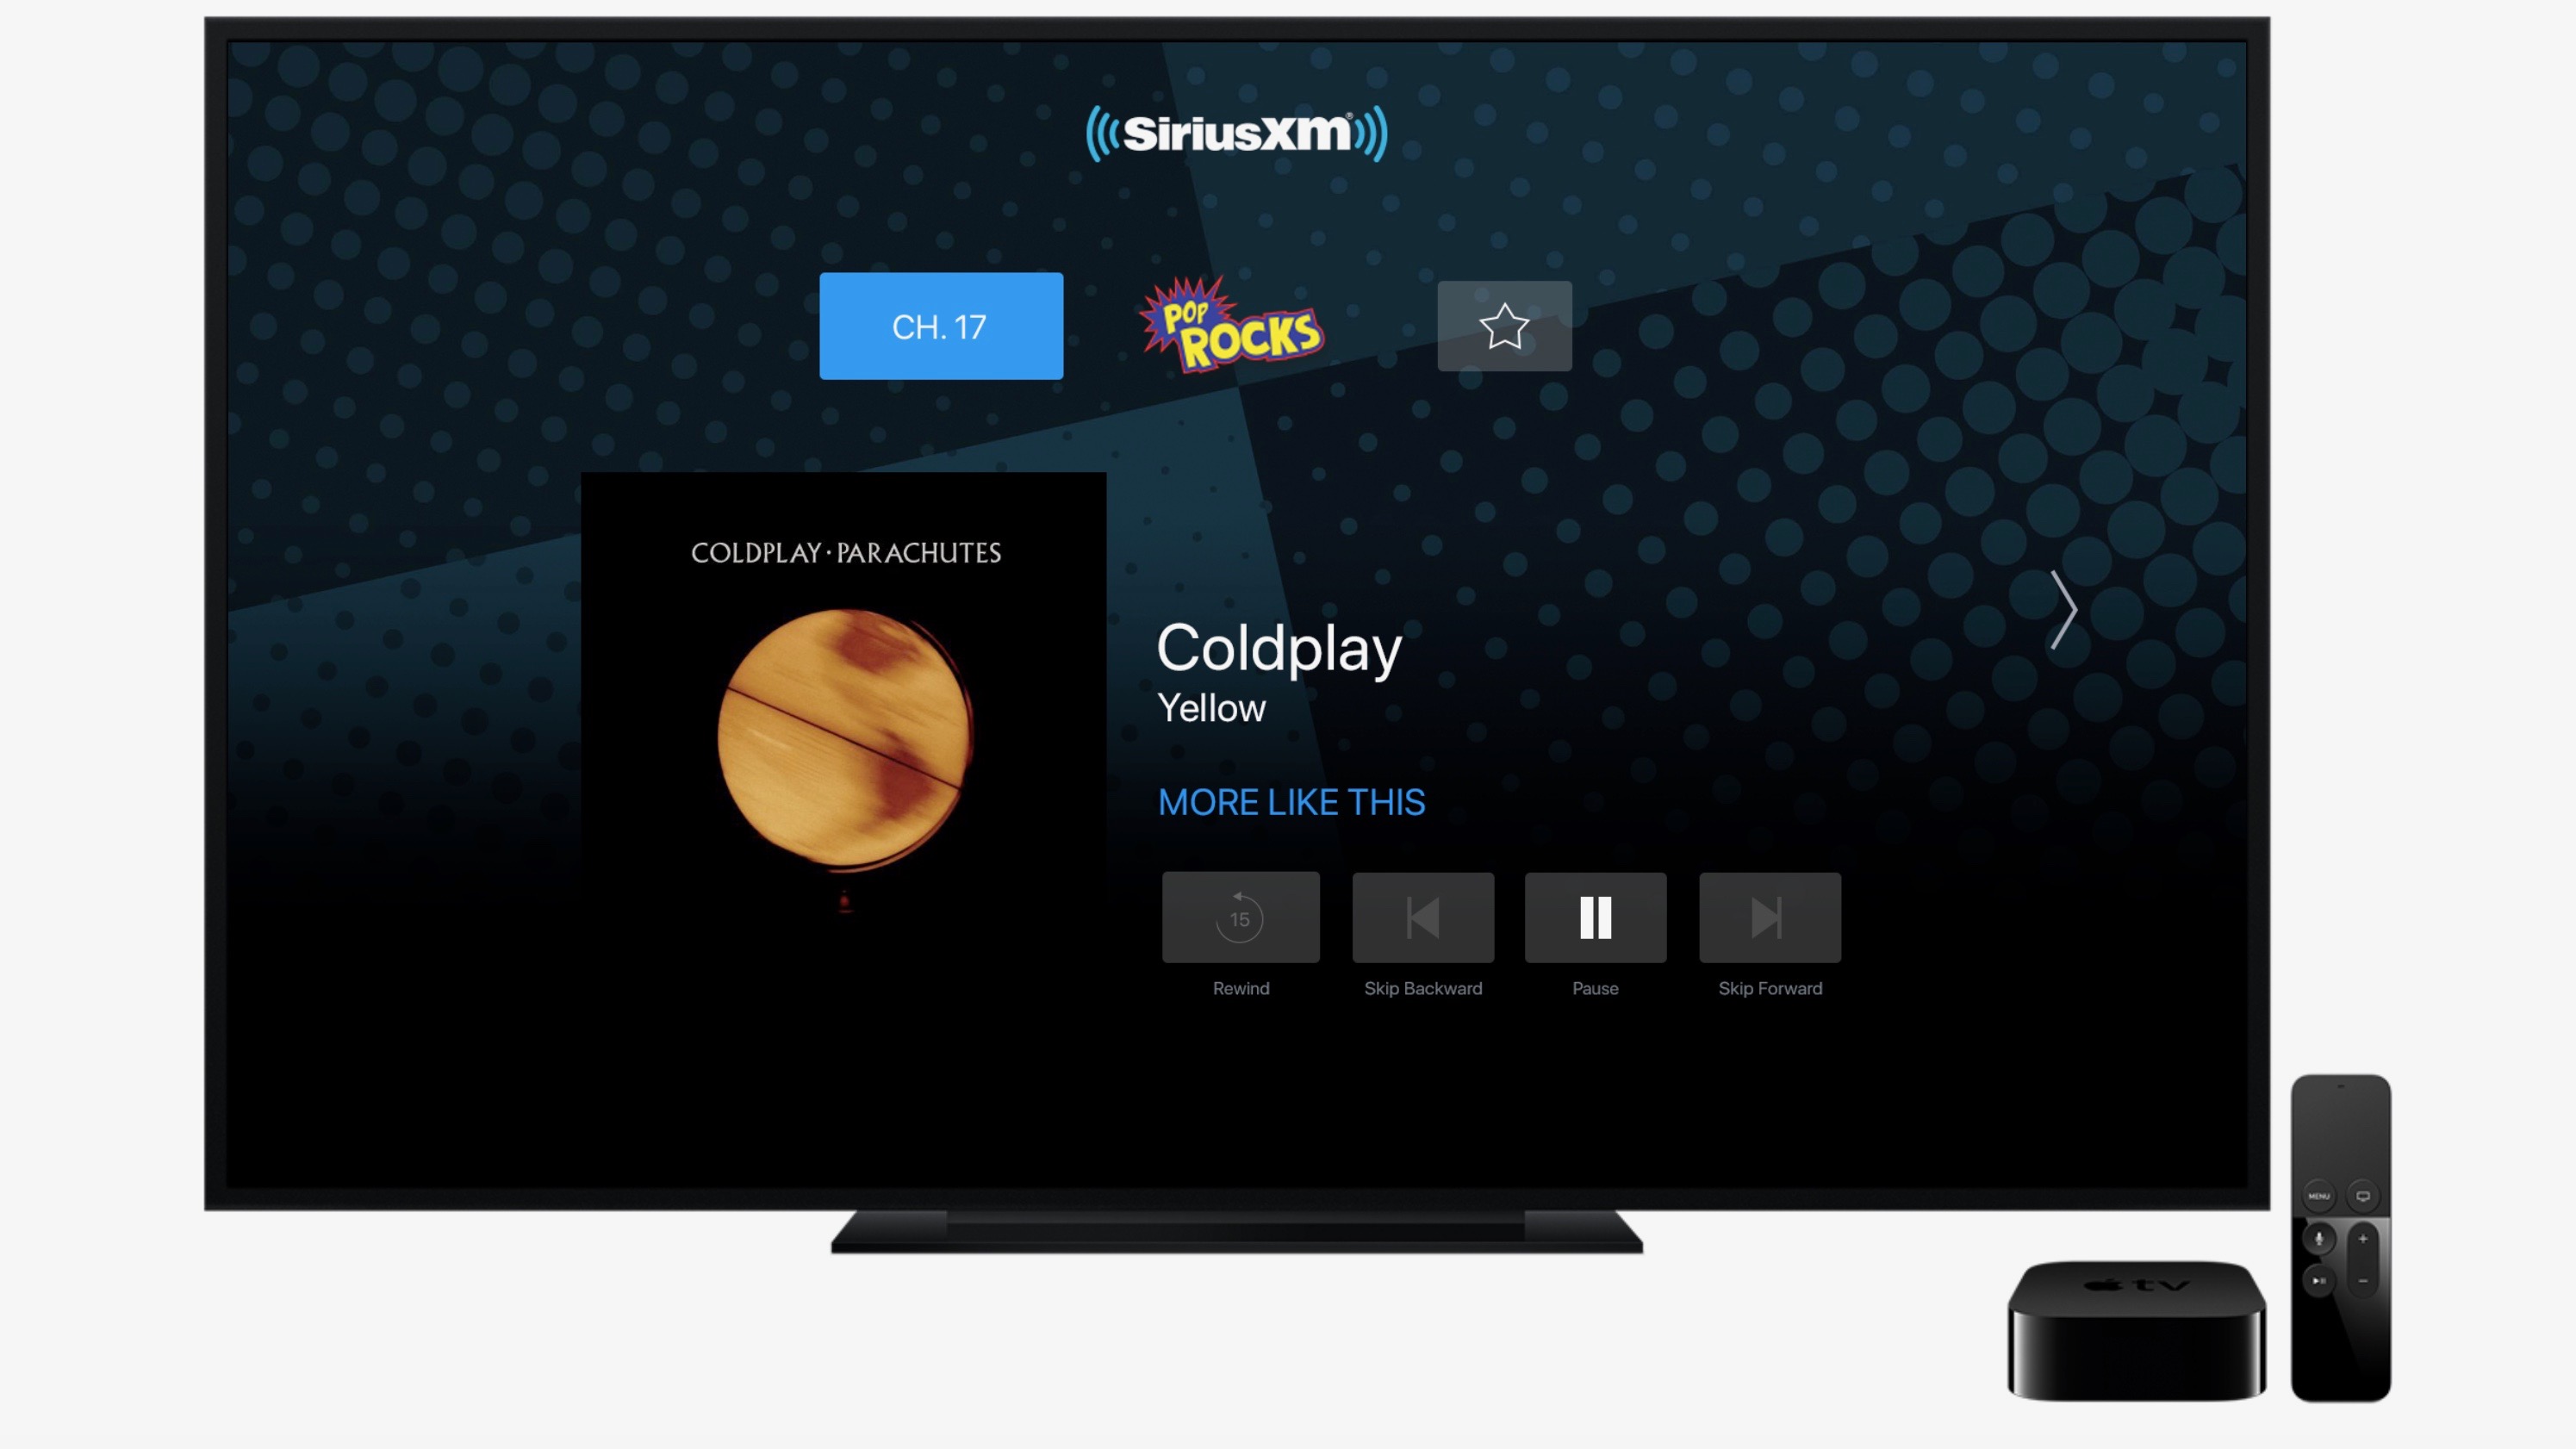 SiriusXM releases new app bringing streaming radio service to Apple TV